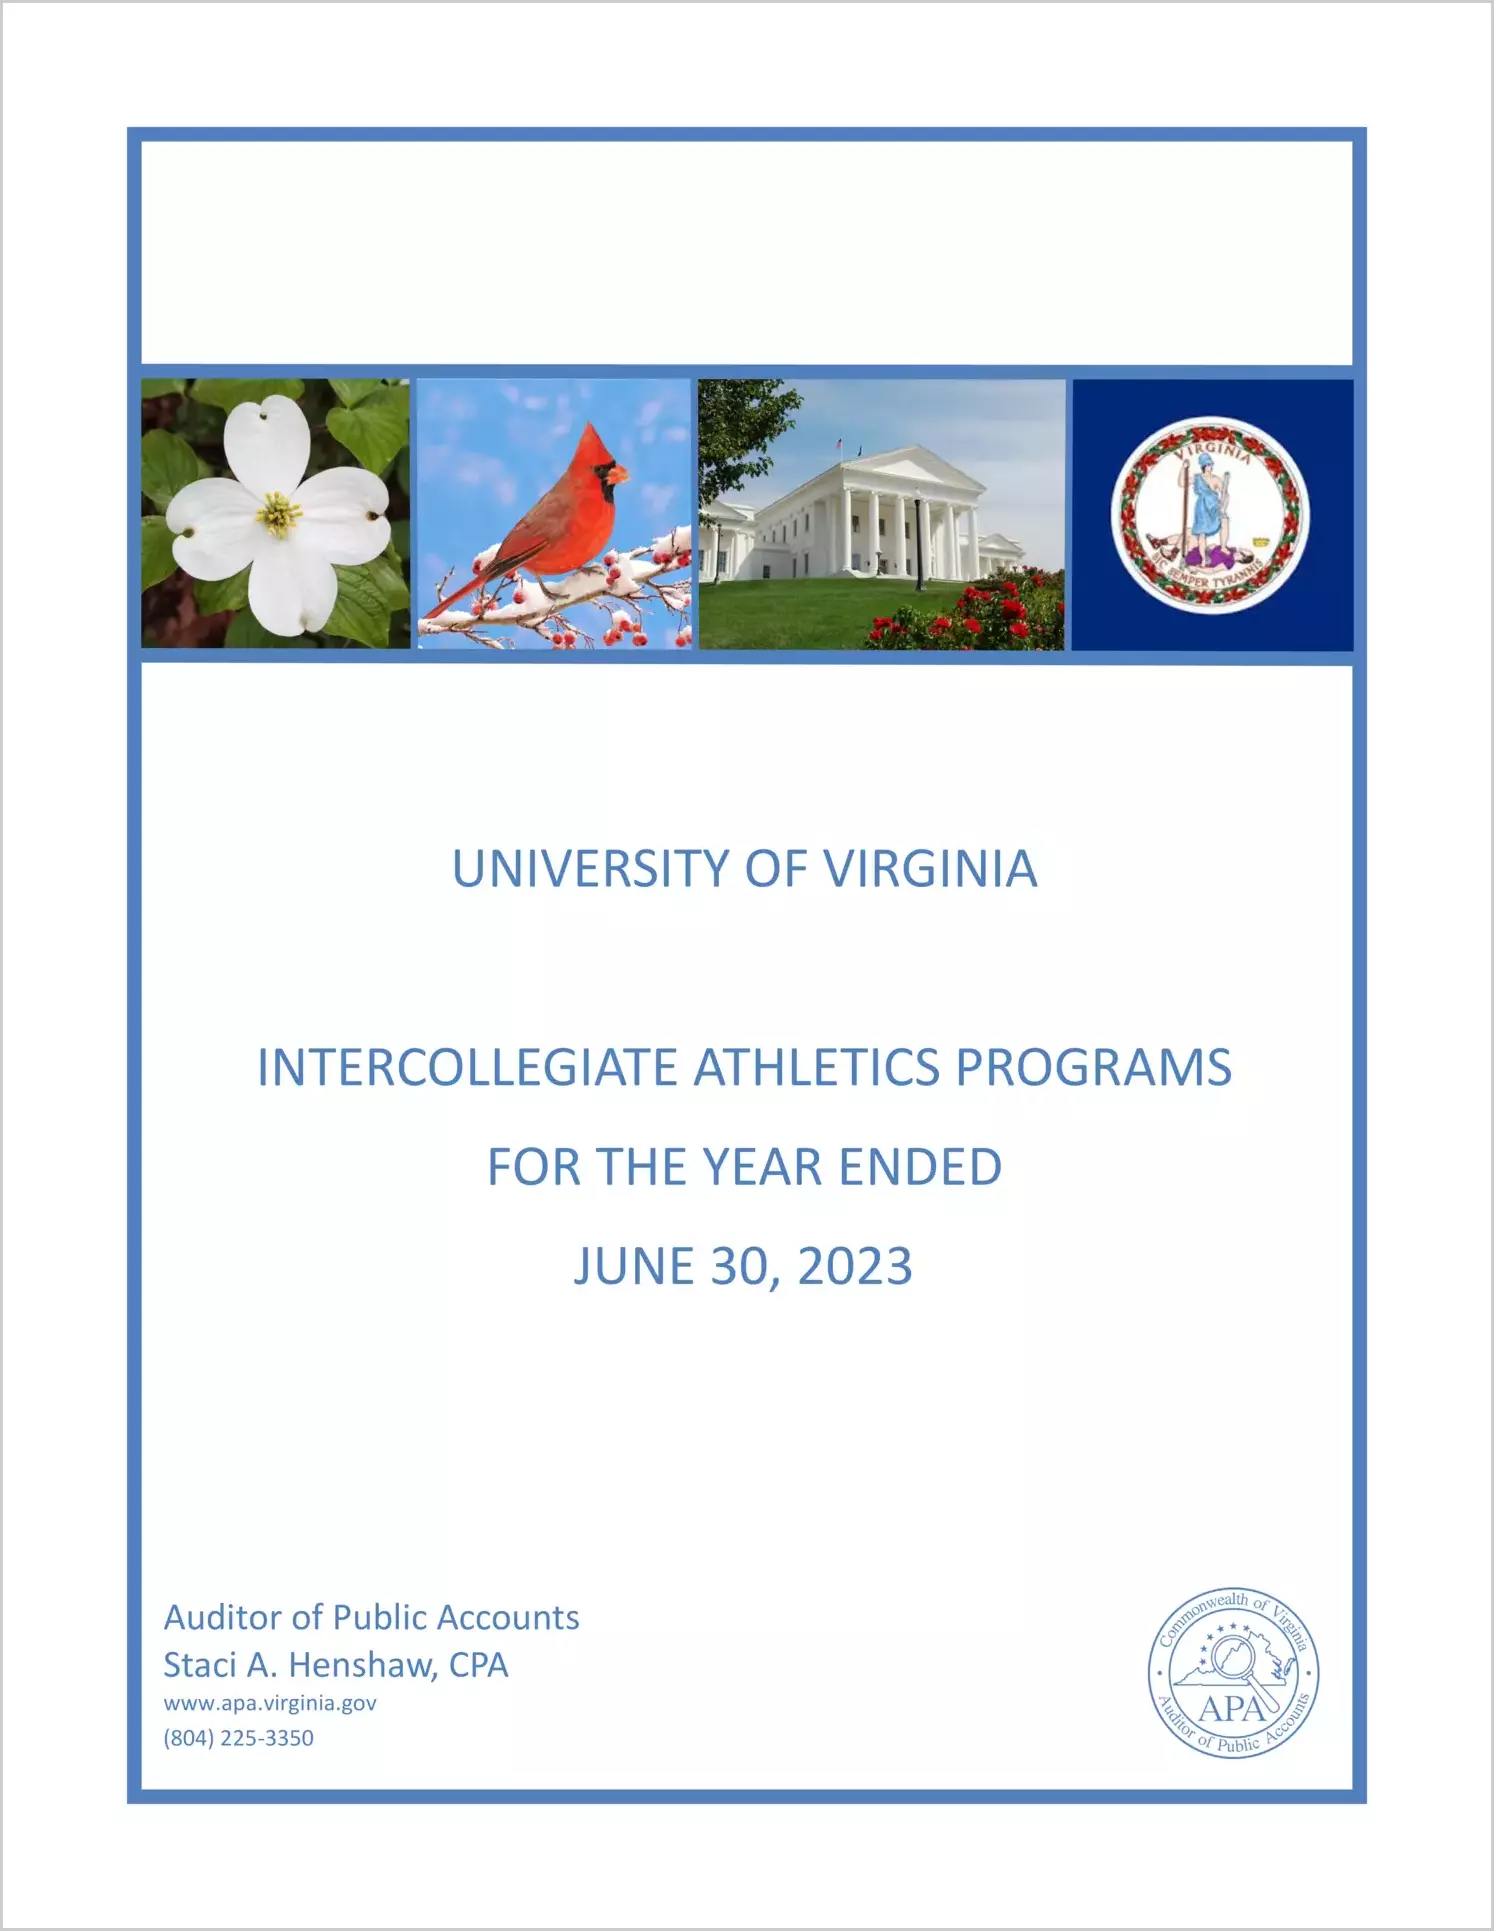 University of Virginia Intercollegiate Athletics Programs for the year ended June 30, 2023